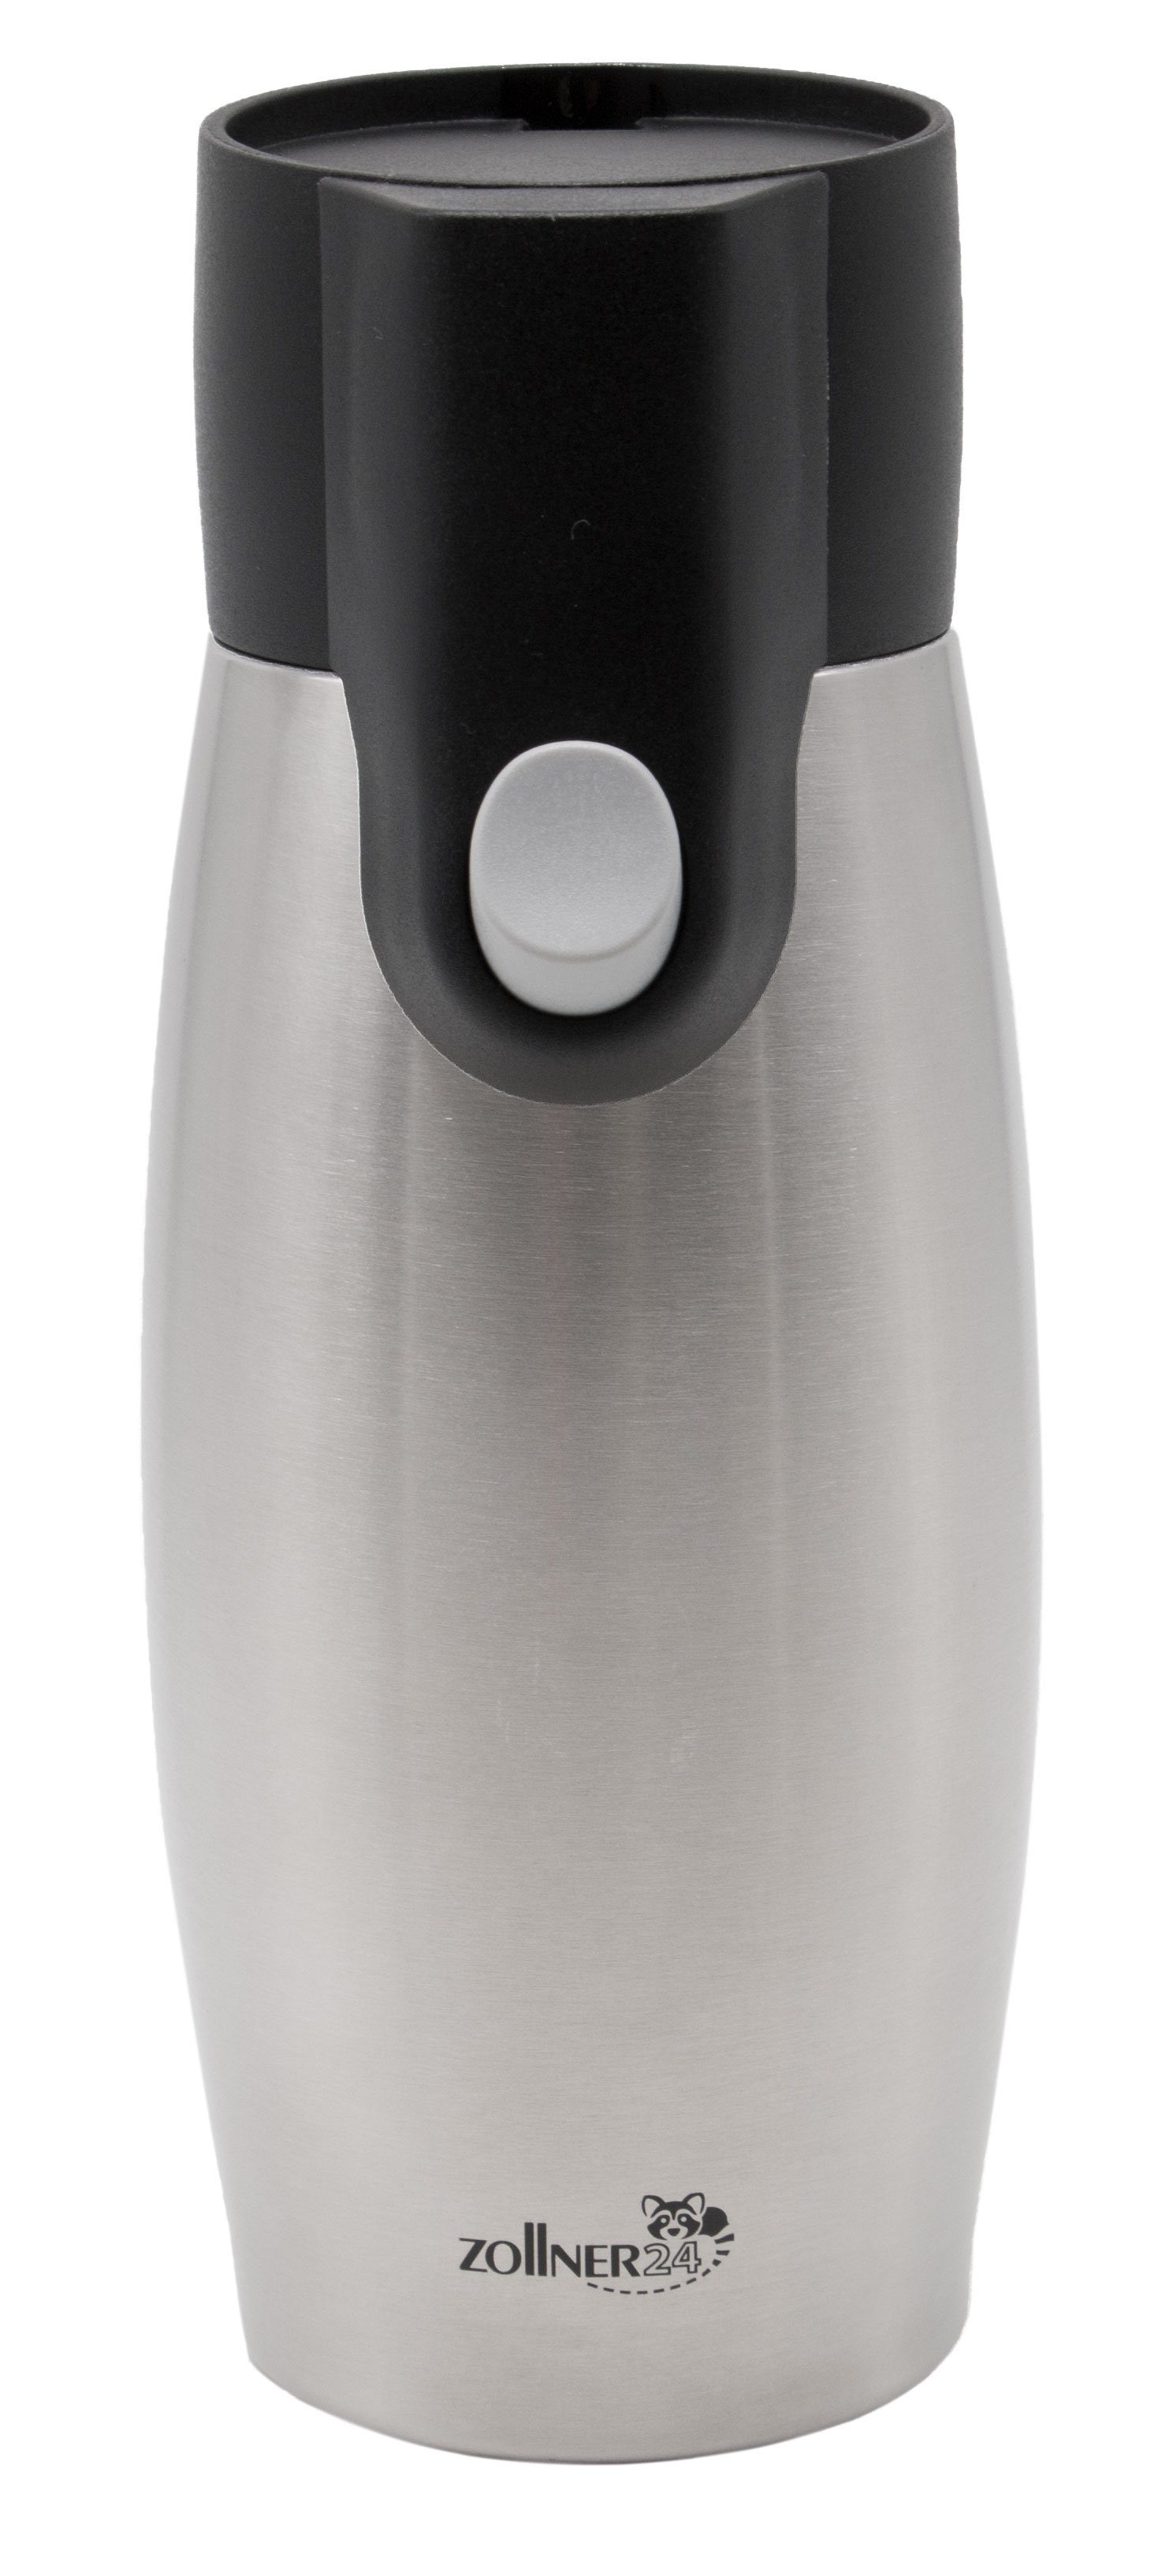 ZOLLNER24 Thermobecher, spülmaschinengeeignet, BPA frei, 500 ml Fassungsvermögen silber